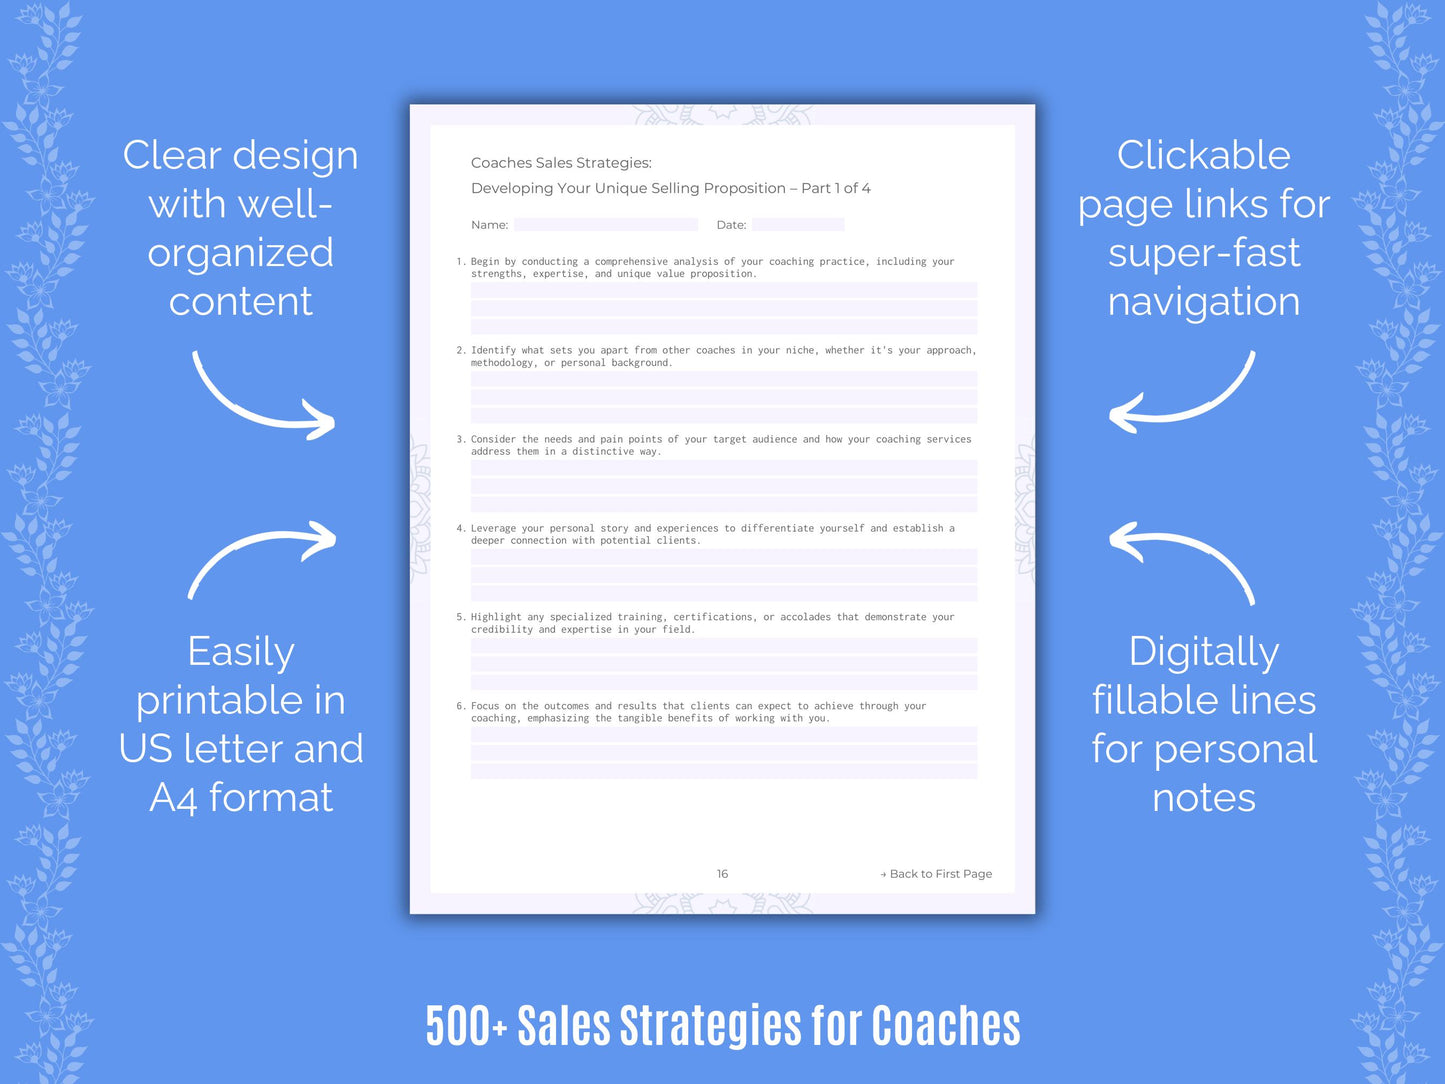 Coaches Sales Strategies